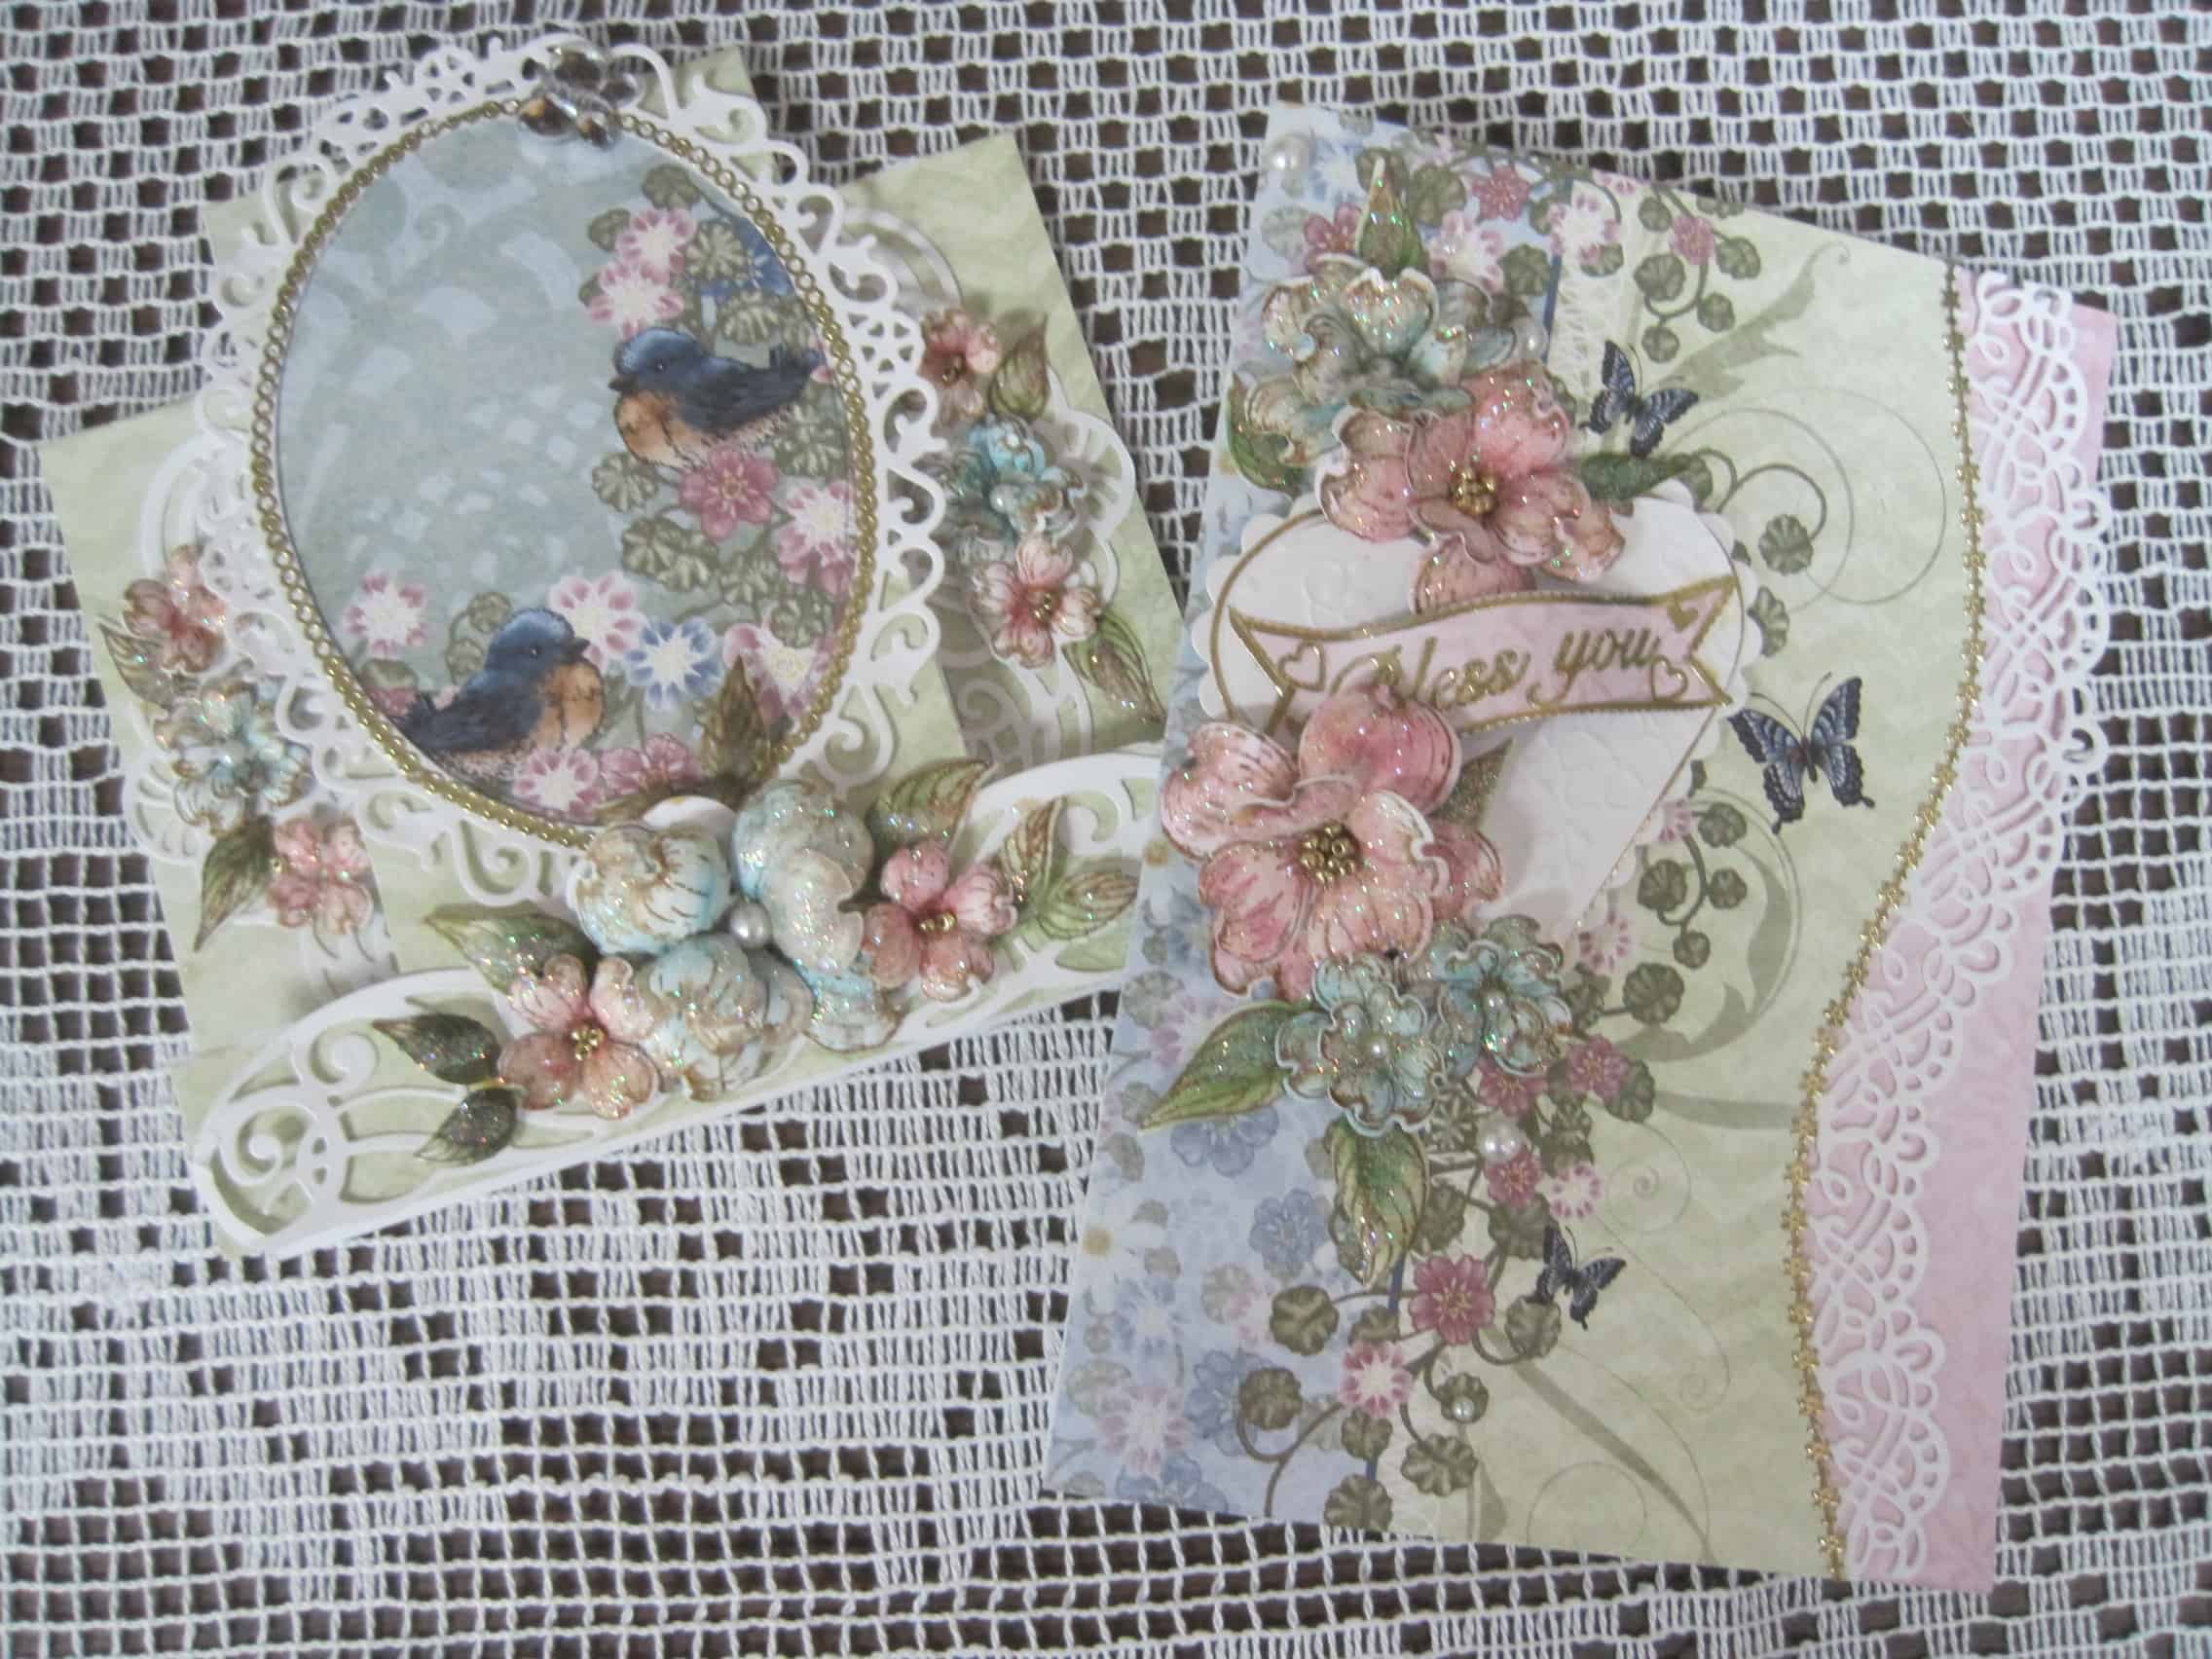 Jan. 20, Sat. Valentine & Heartfelt Garden Fairy cards – Lynda